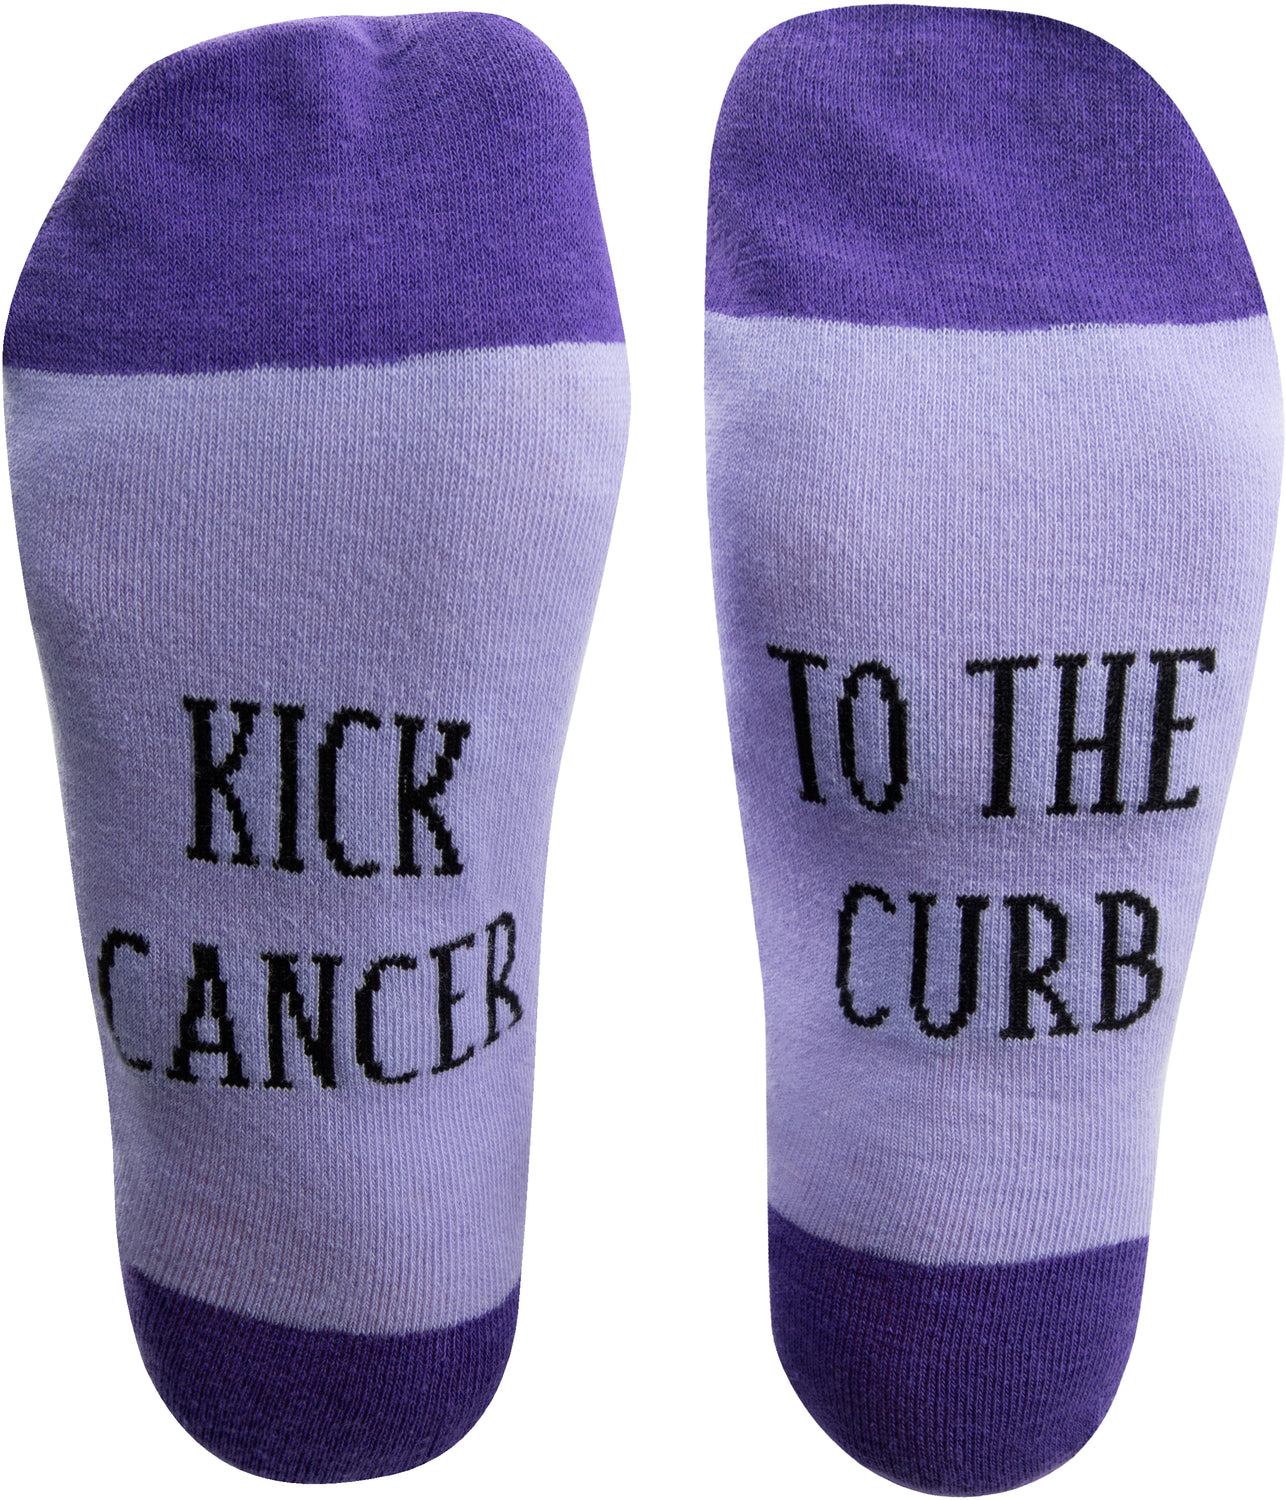 Kick Cancer - M/L Unisex Sock